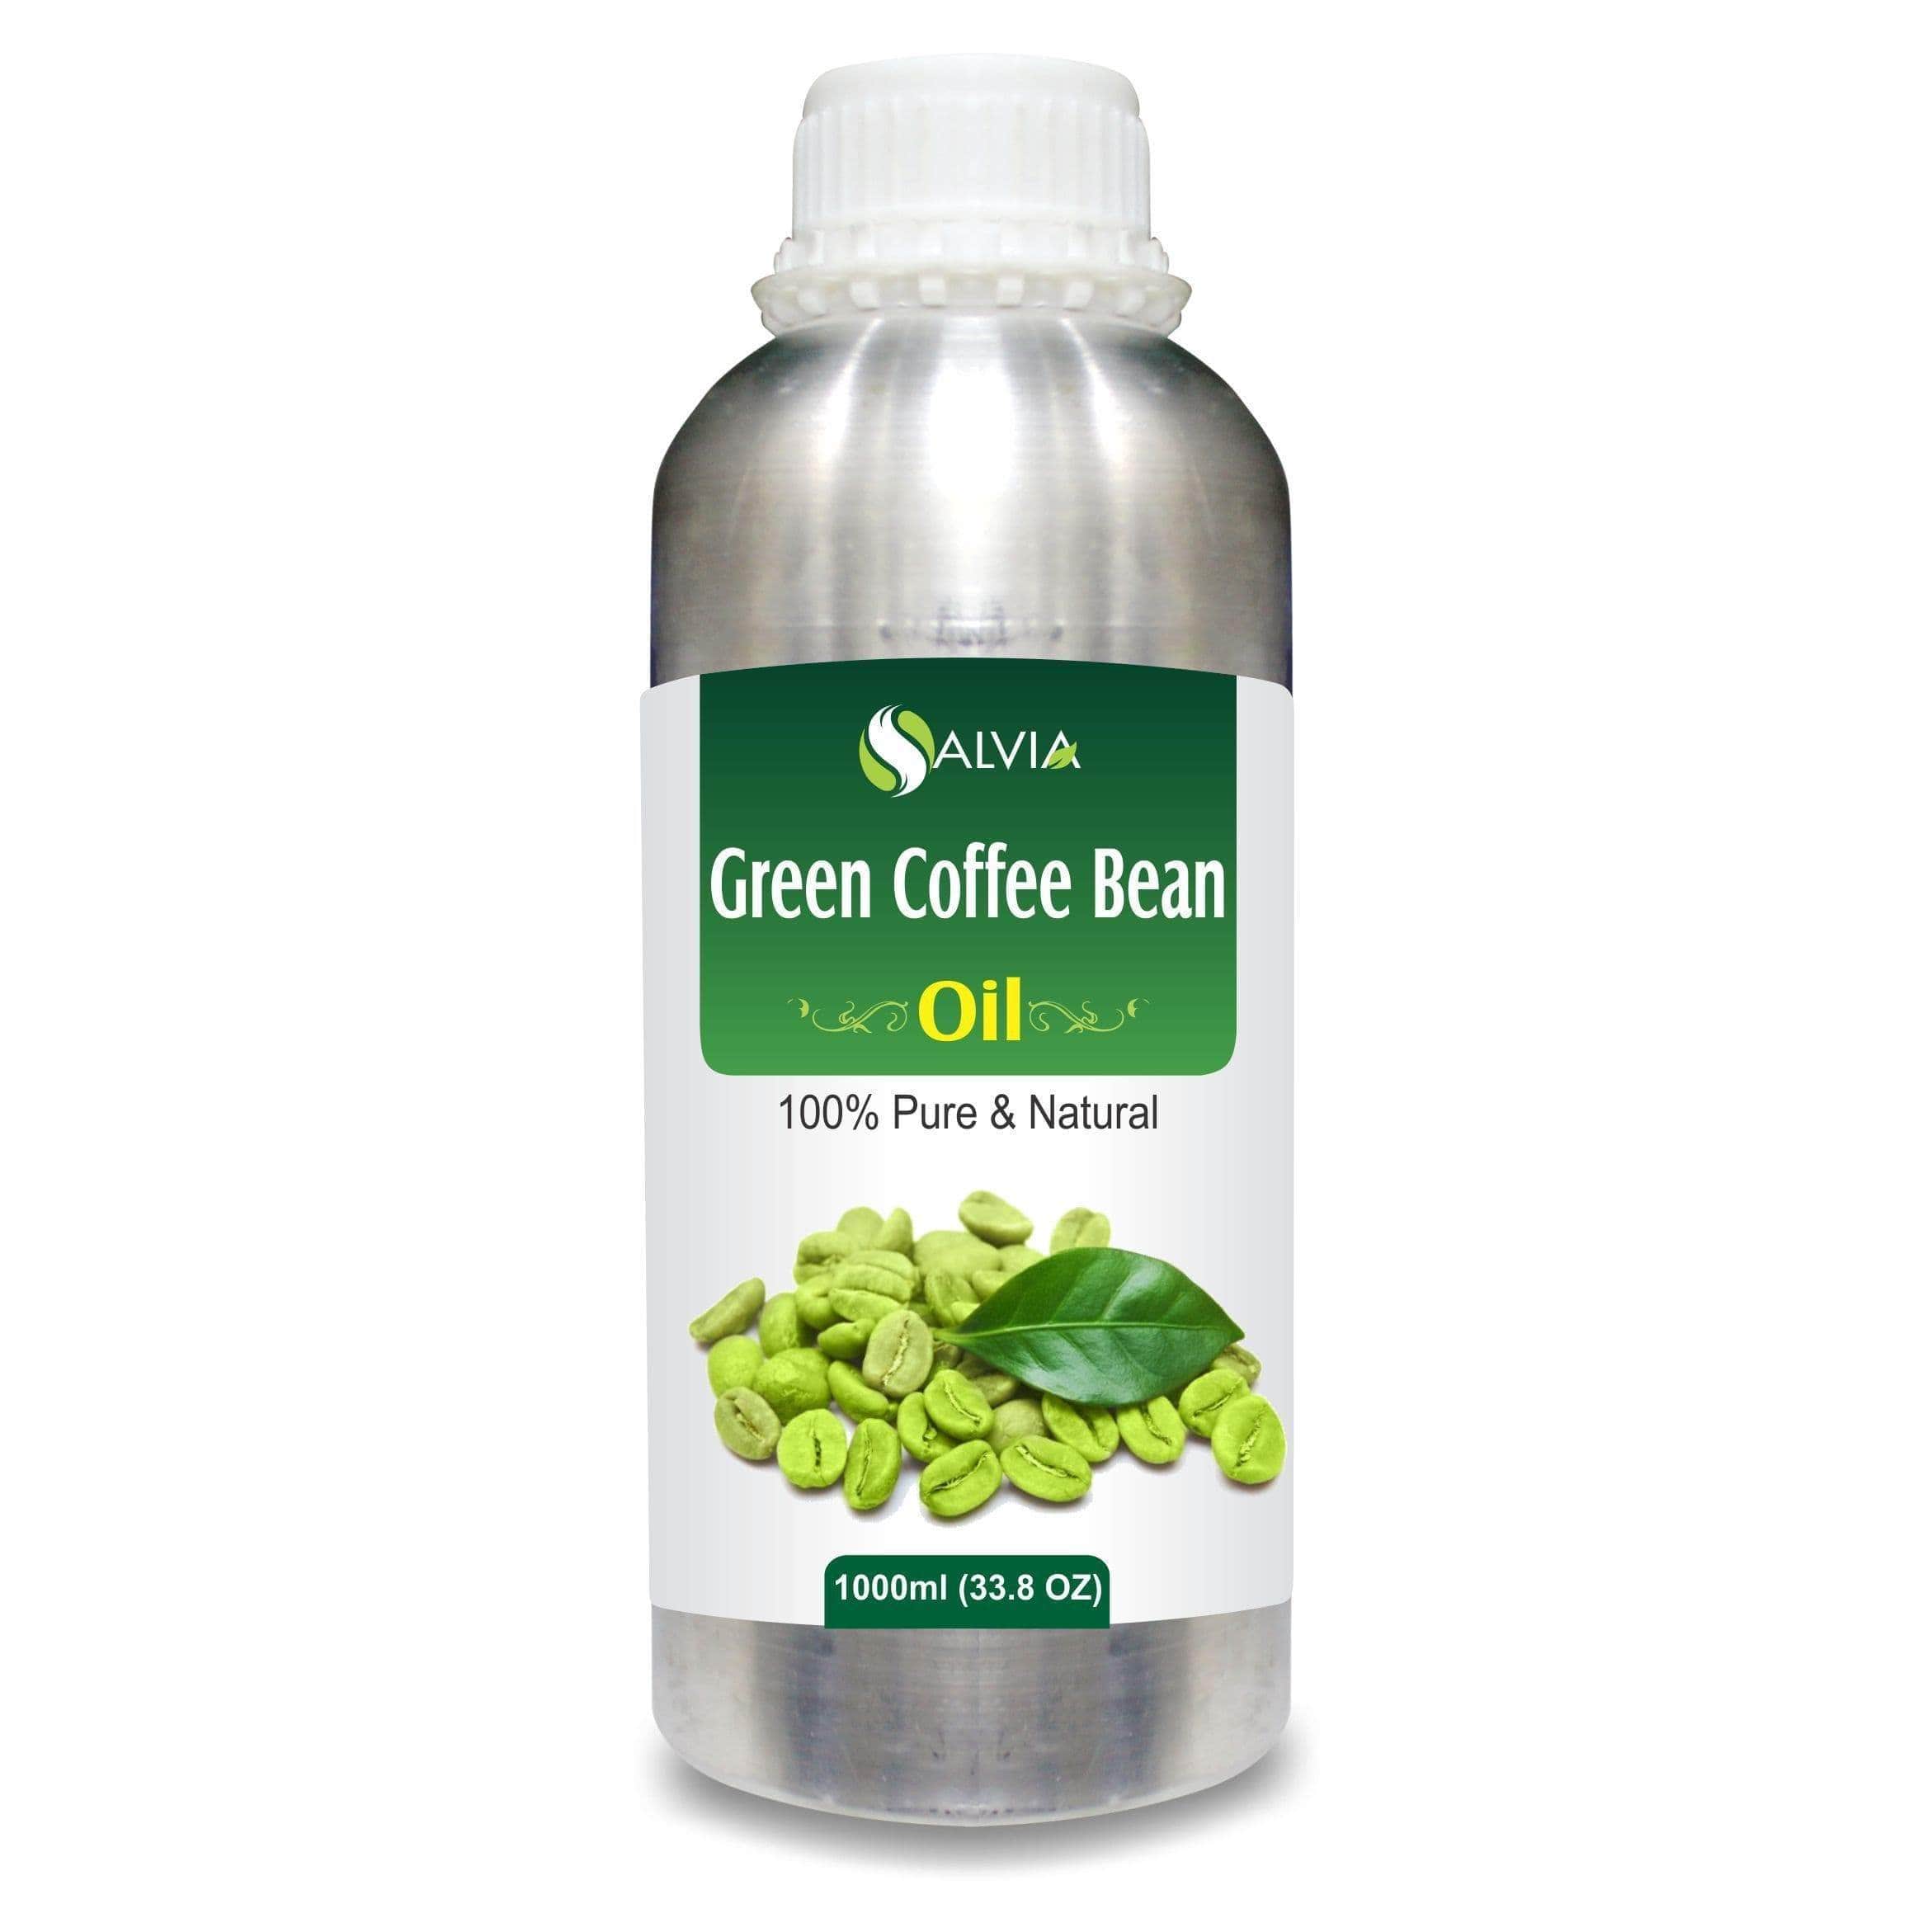 green coffee bean oil benefits